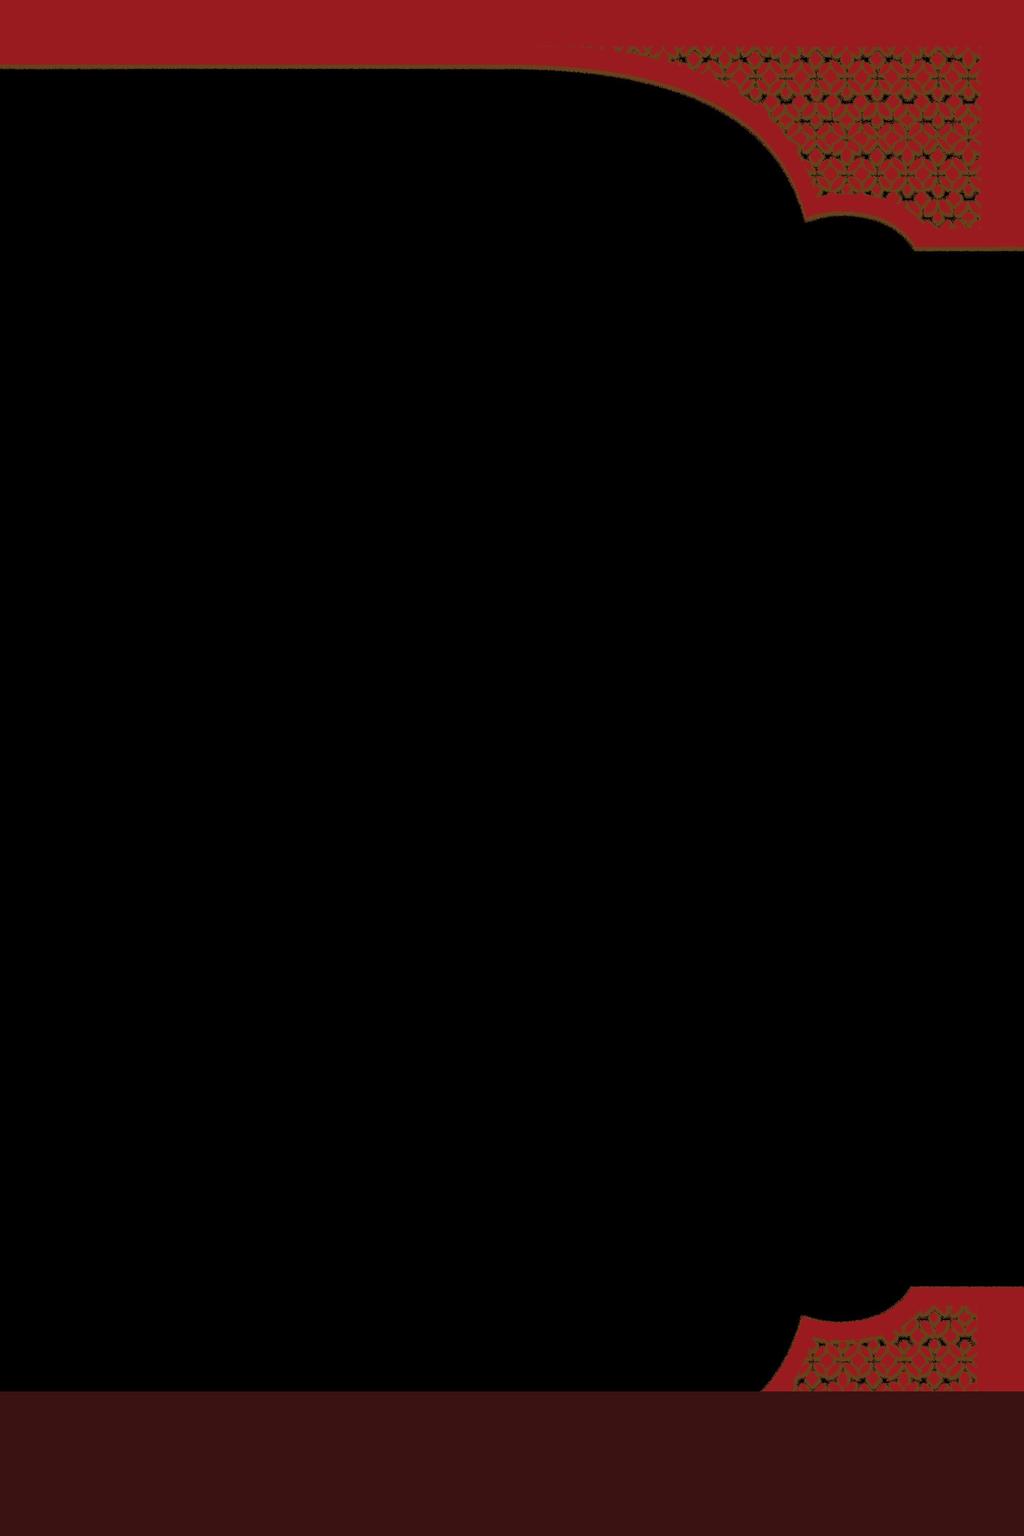 甜品精選 DESSERT 香芒布甸 Mango Pudding Served with whipped cream 法式巧克力蛋糕 Chocolate Bonbons Dark chocolate cake filled with a rich chocolate mousse, served with raspberry sauce 椰香芝士蛋糕